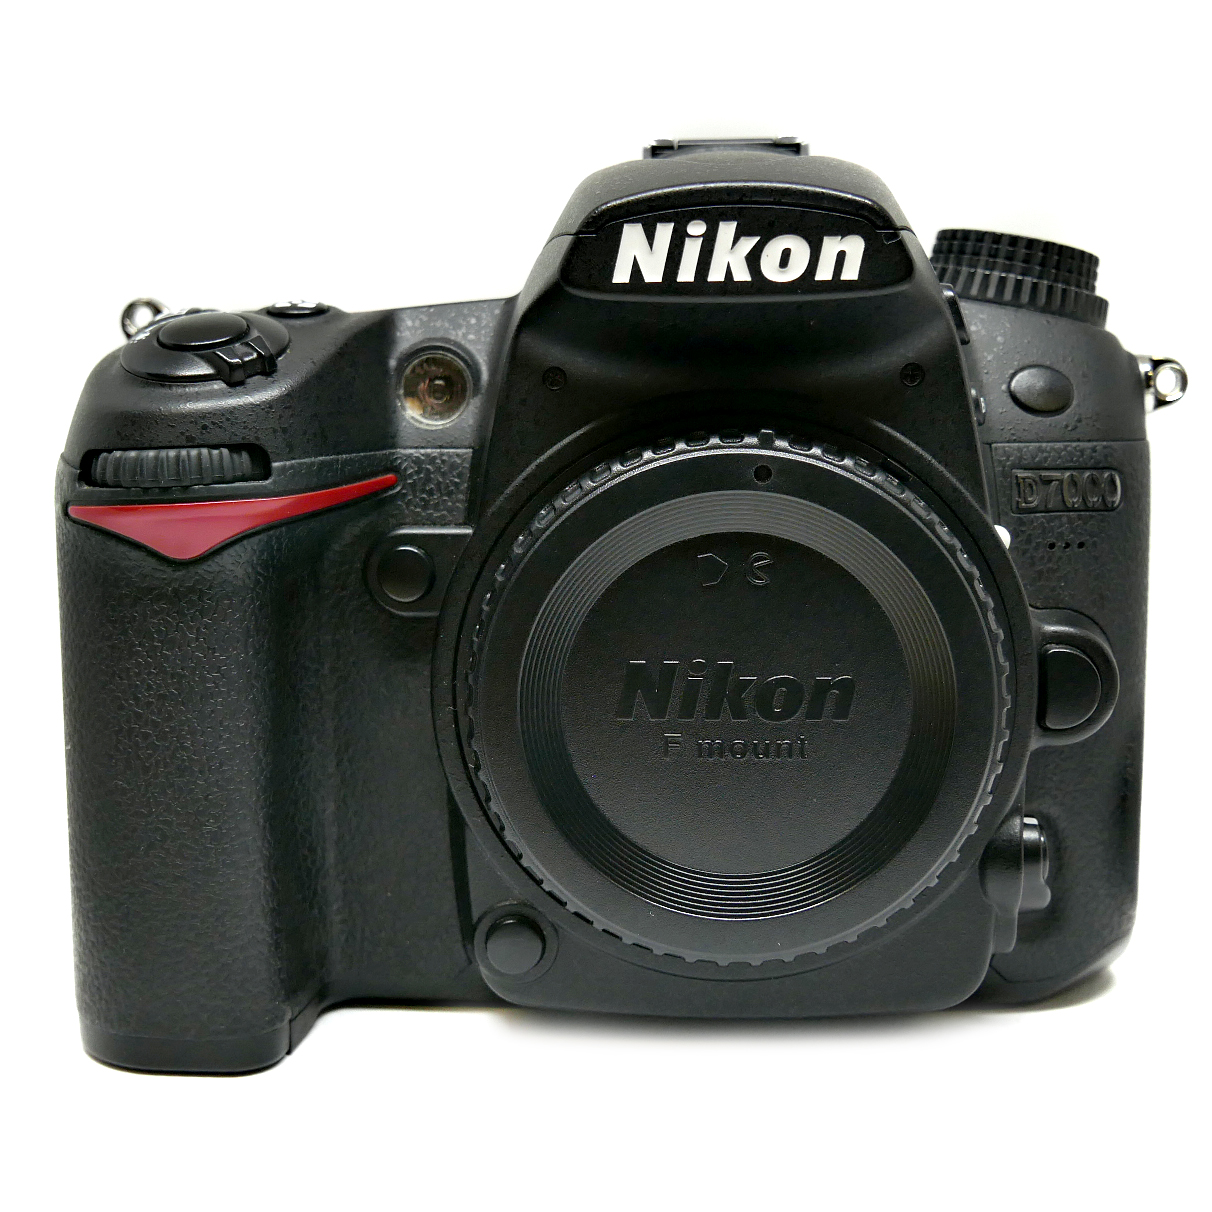 (Myyty) Nikon D7000 runko (SC:14305) (käytetty)